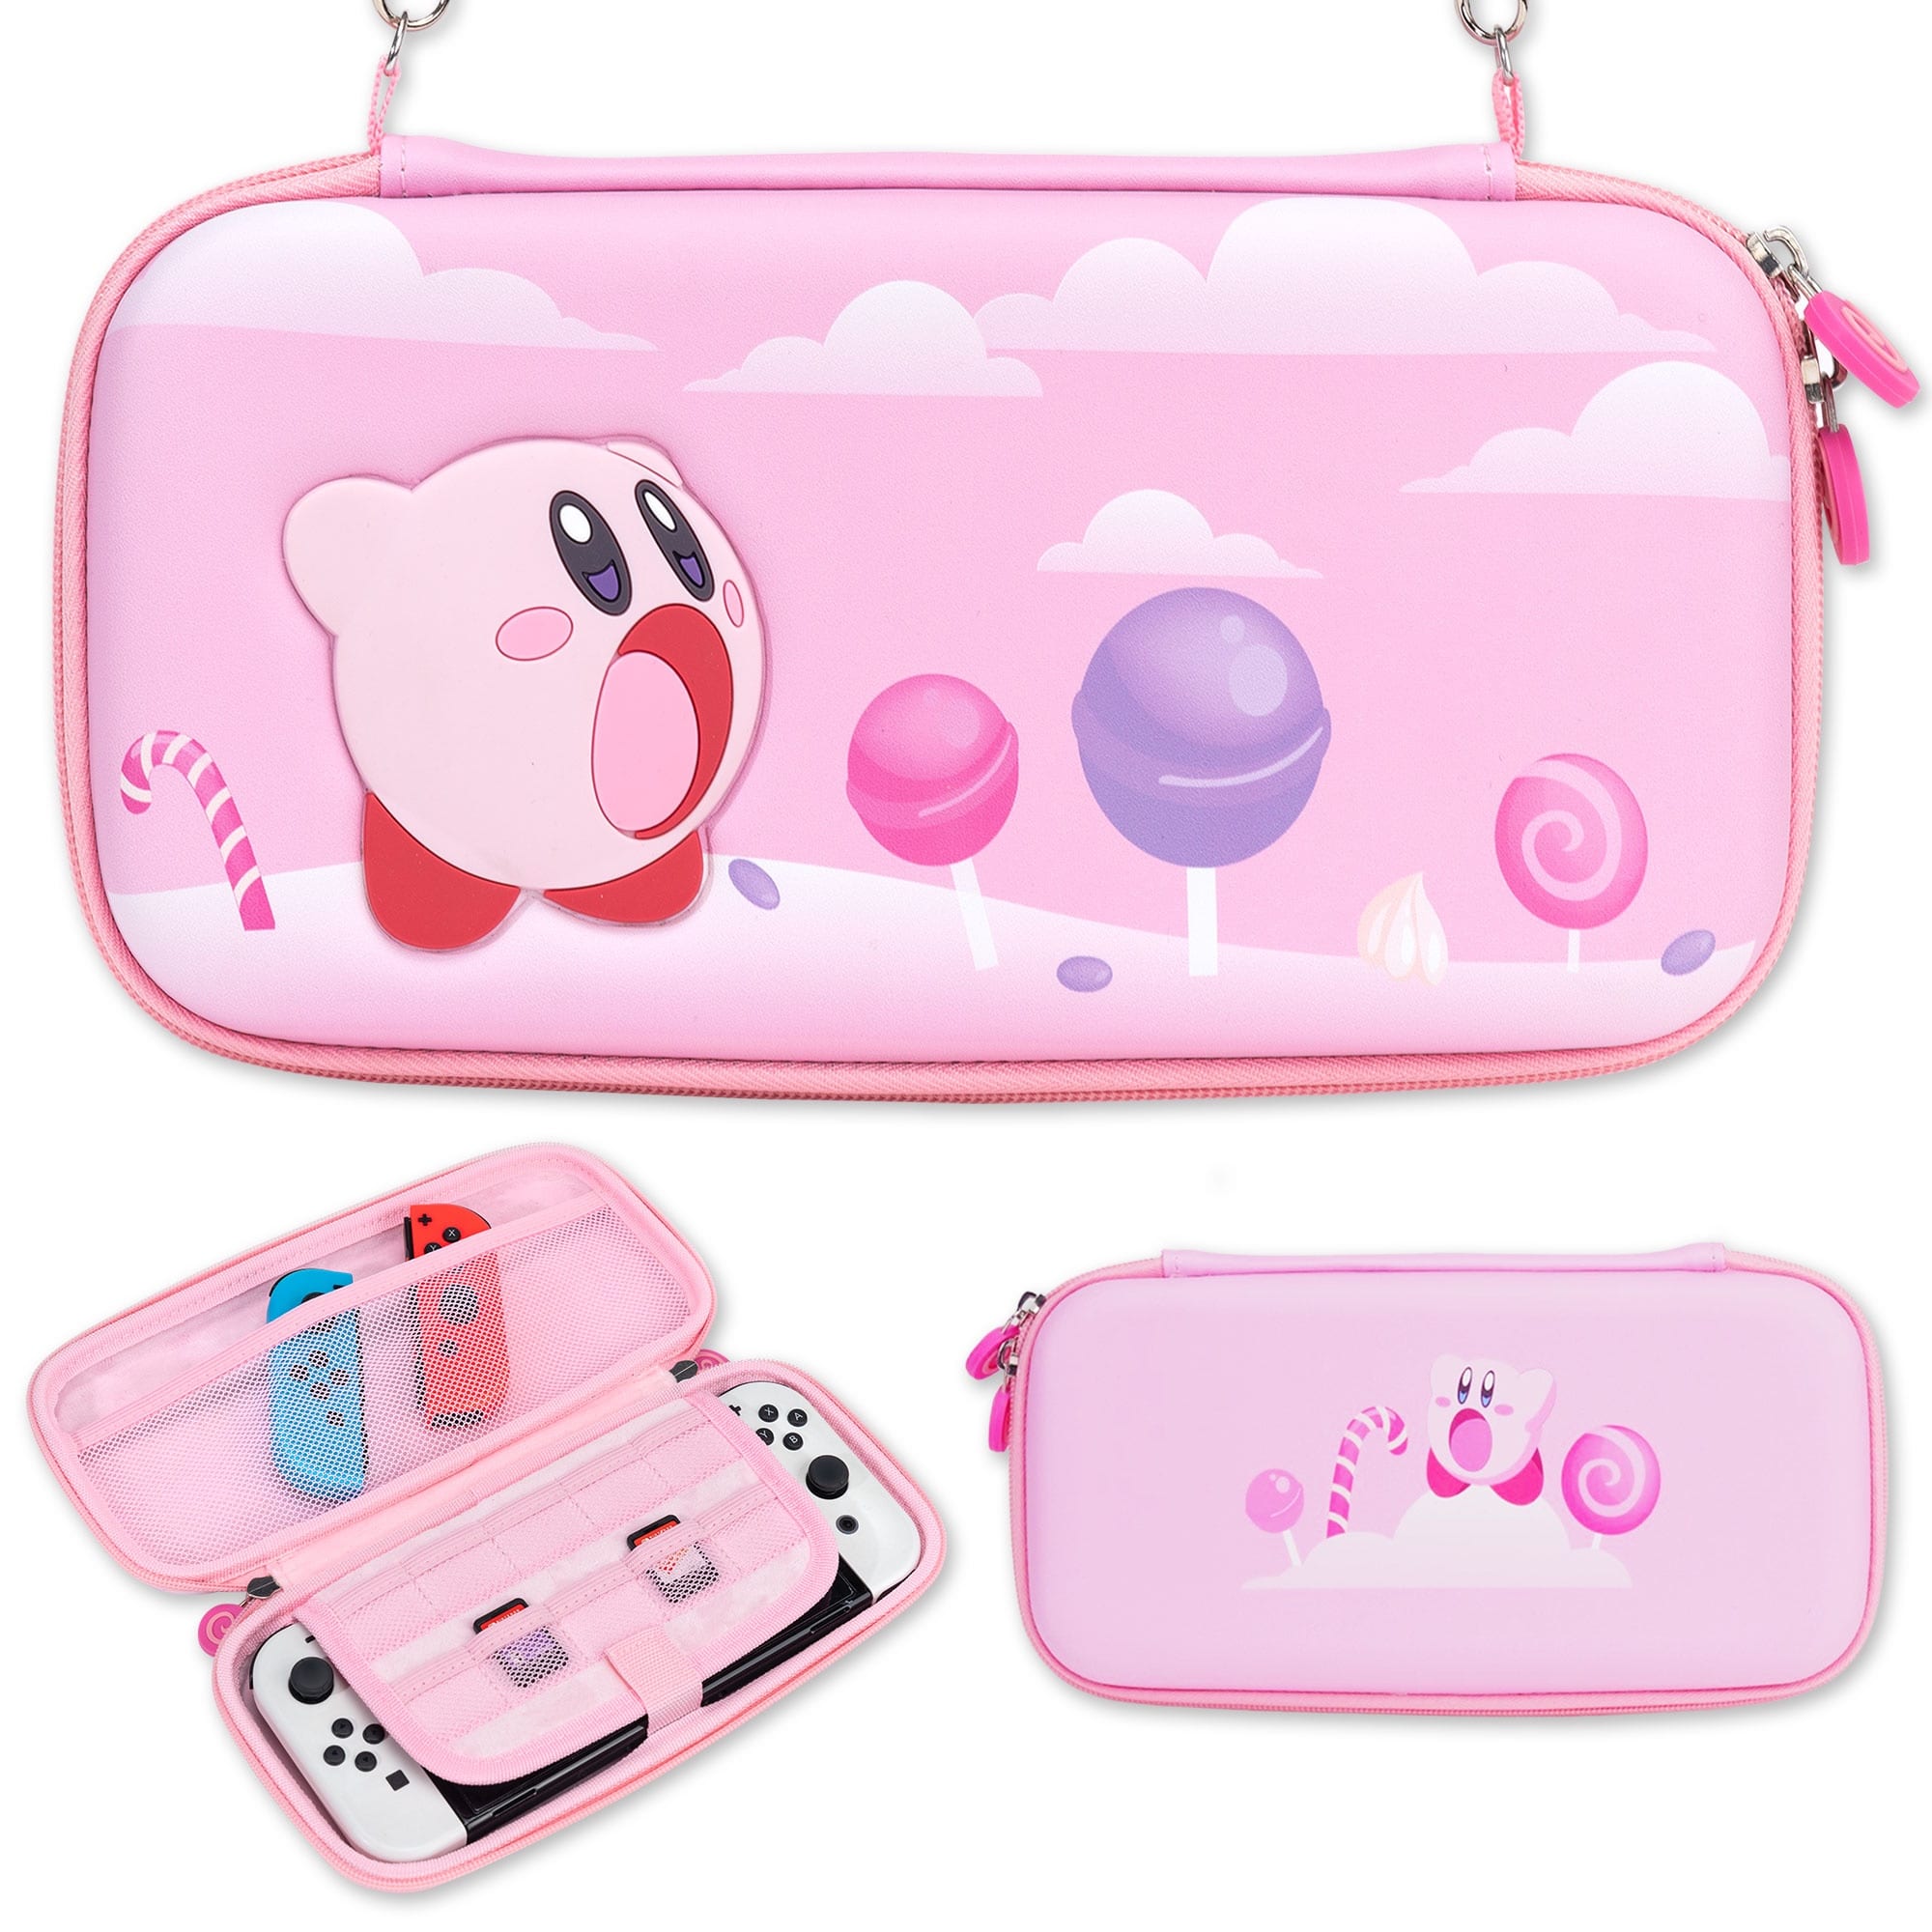 Kirby Lunchbox